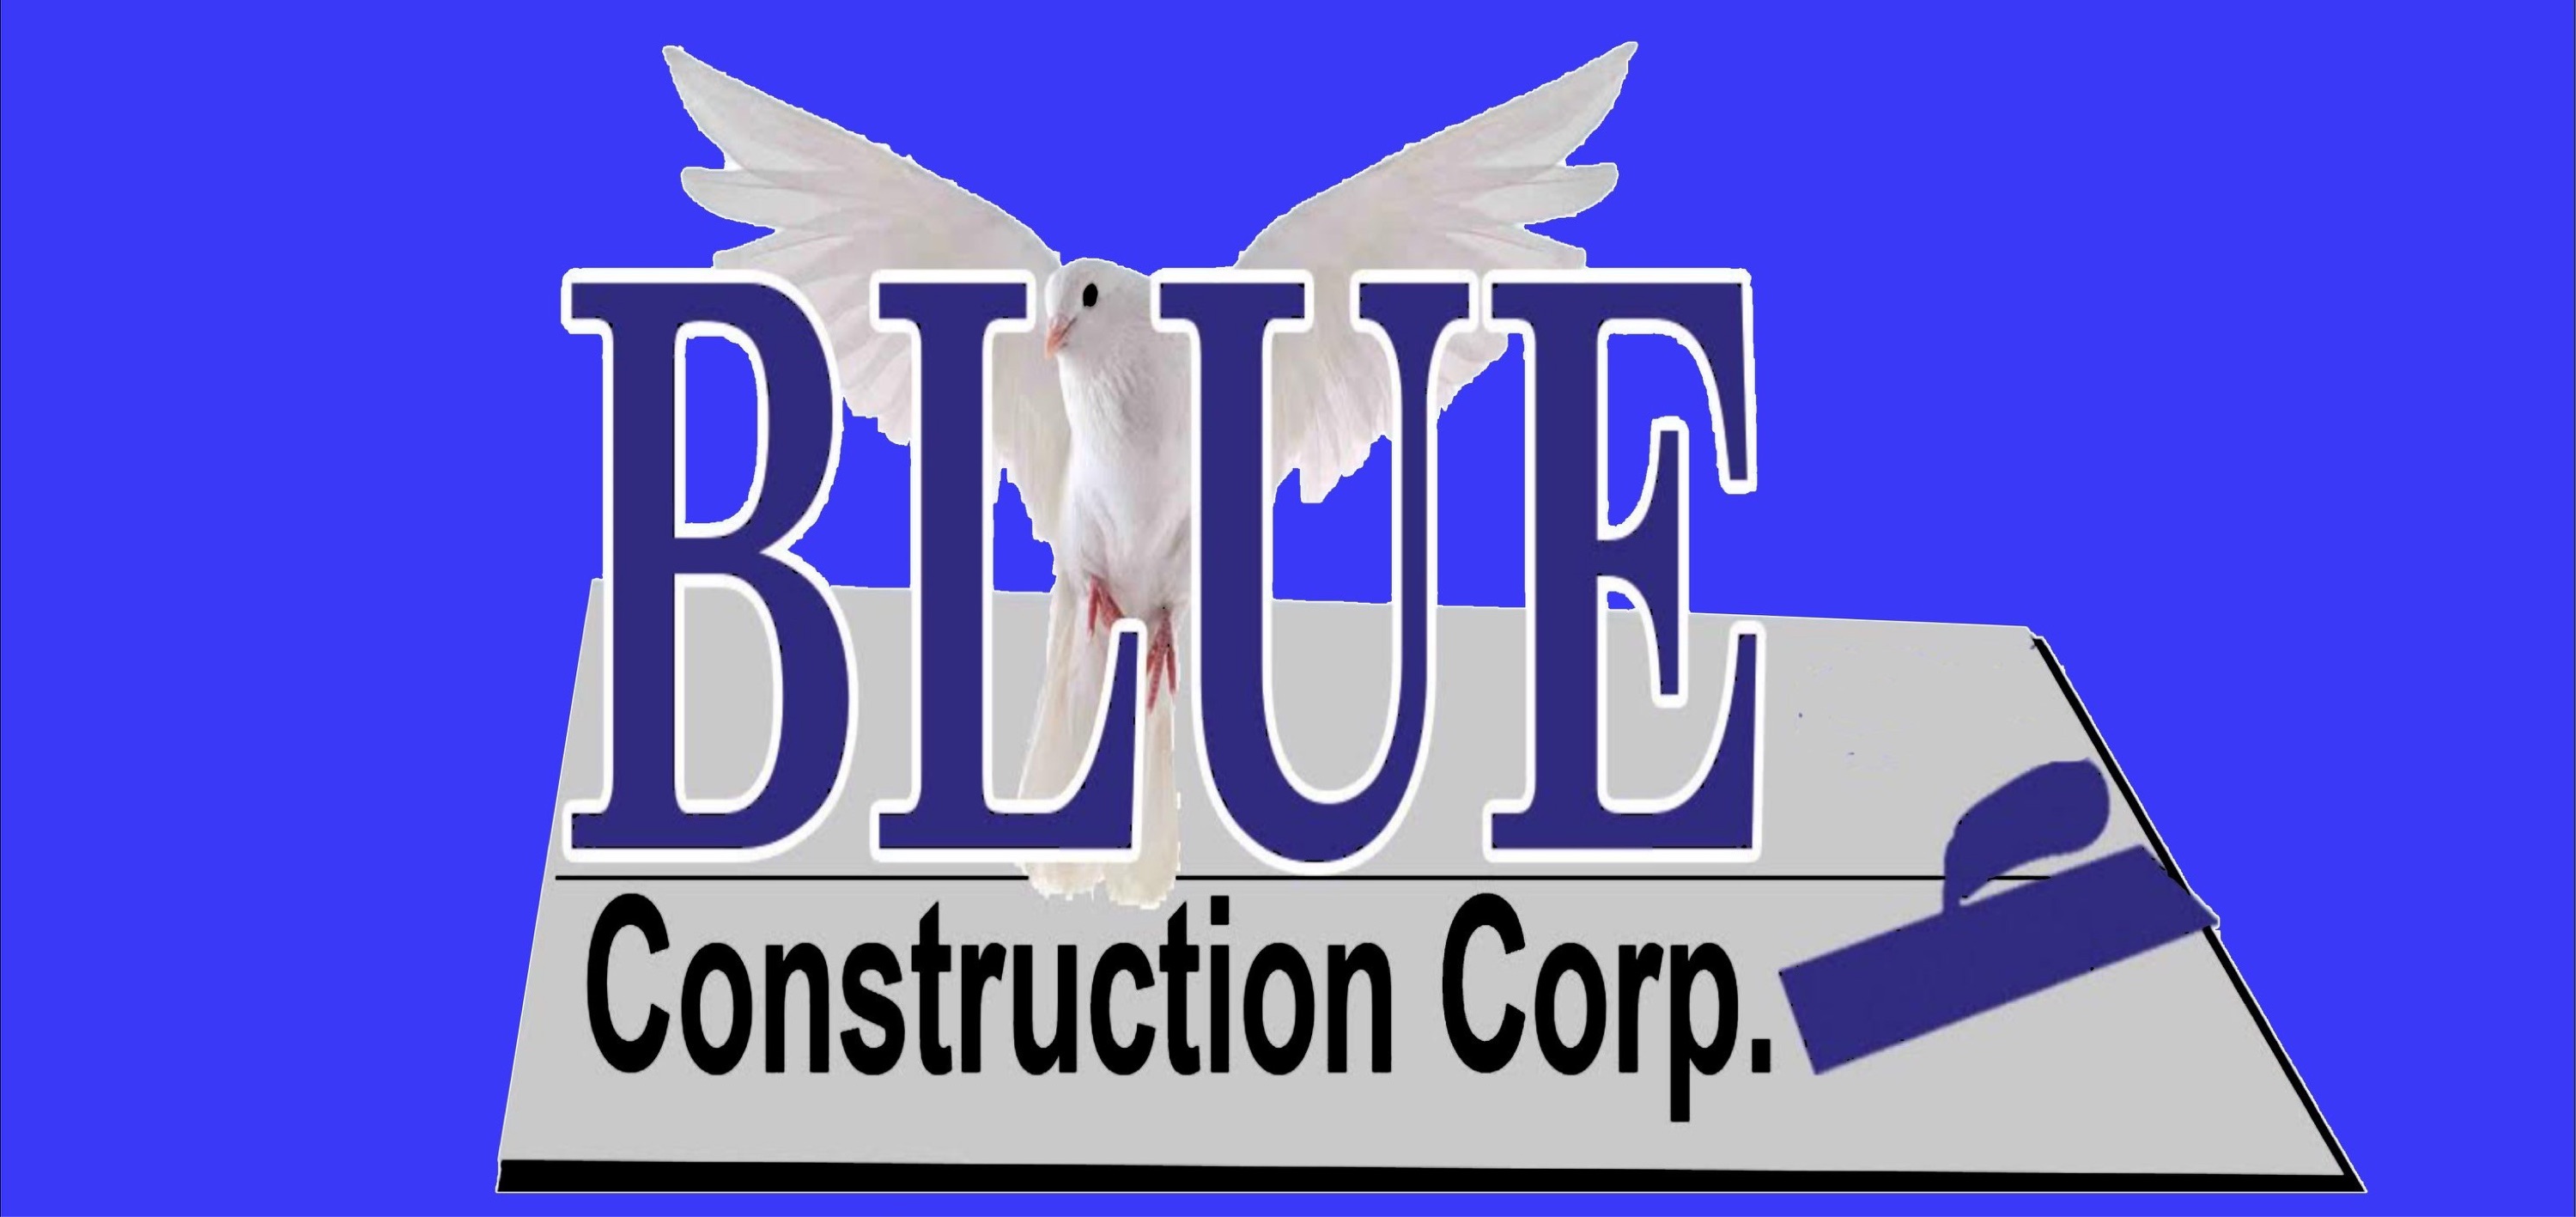 Blue Construction Corp. Logo